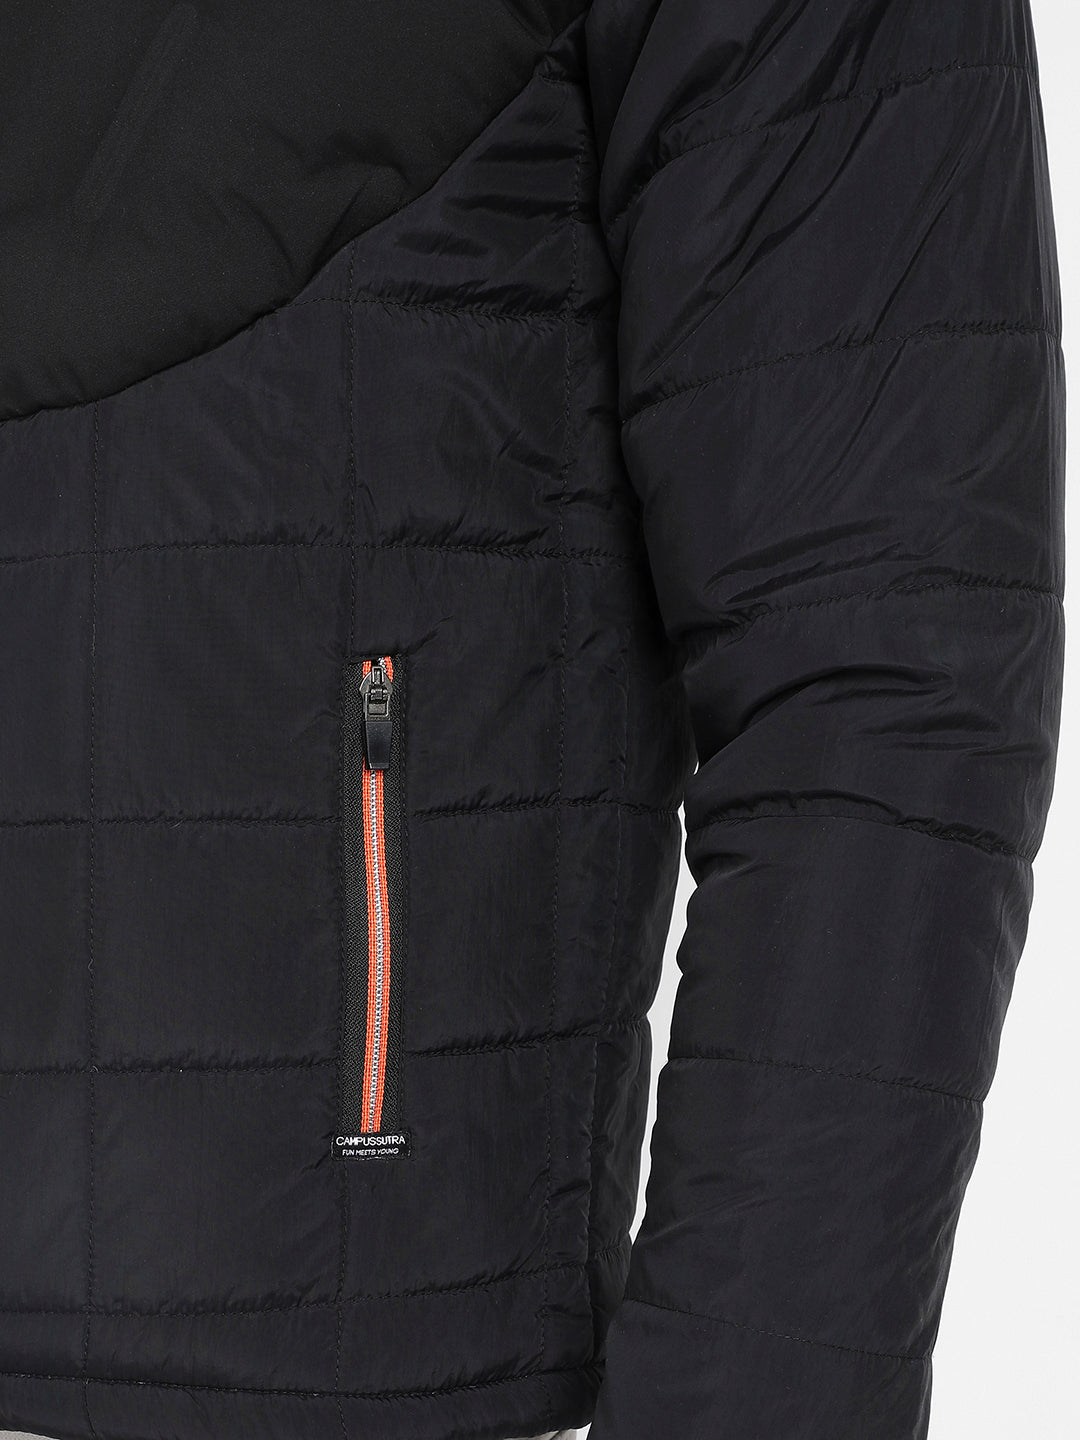 Men's Black Puffer Jacket With Contrast Zipper